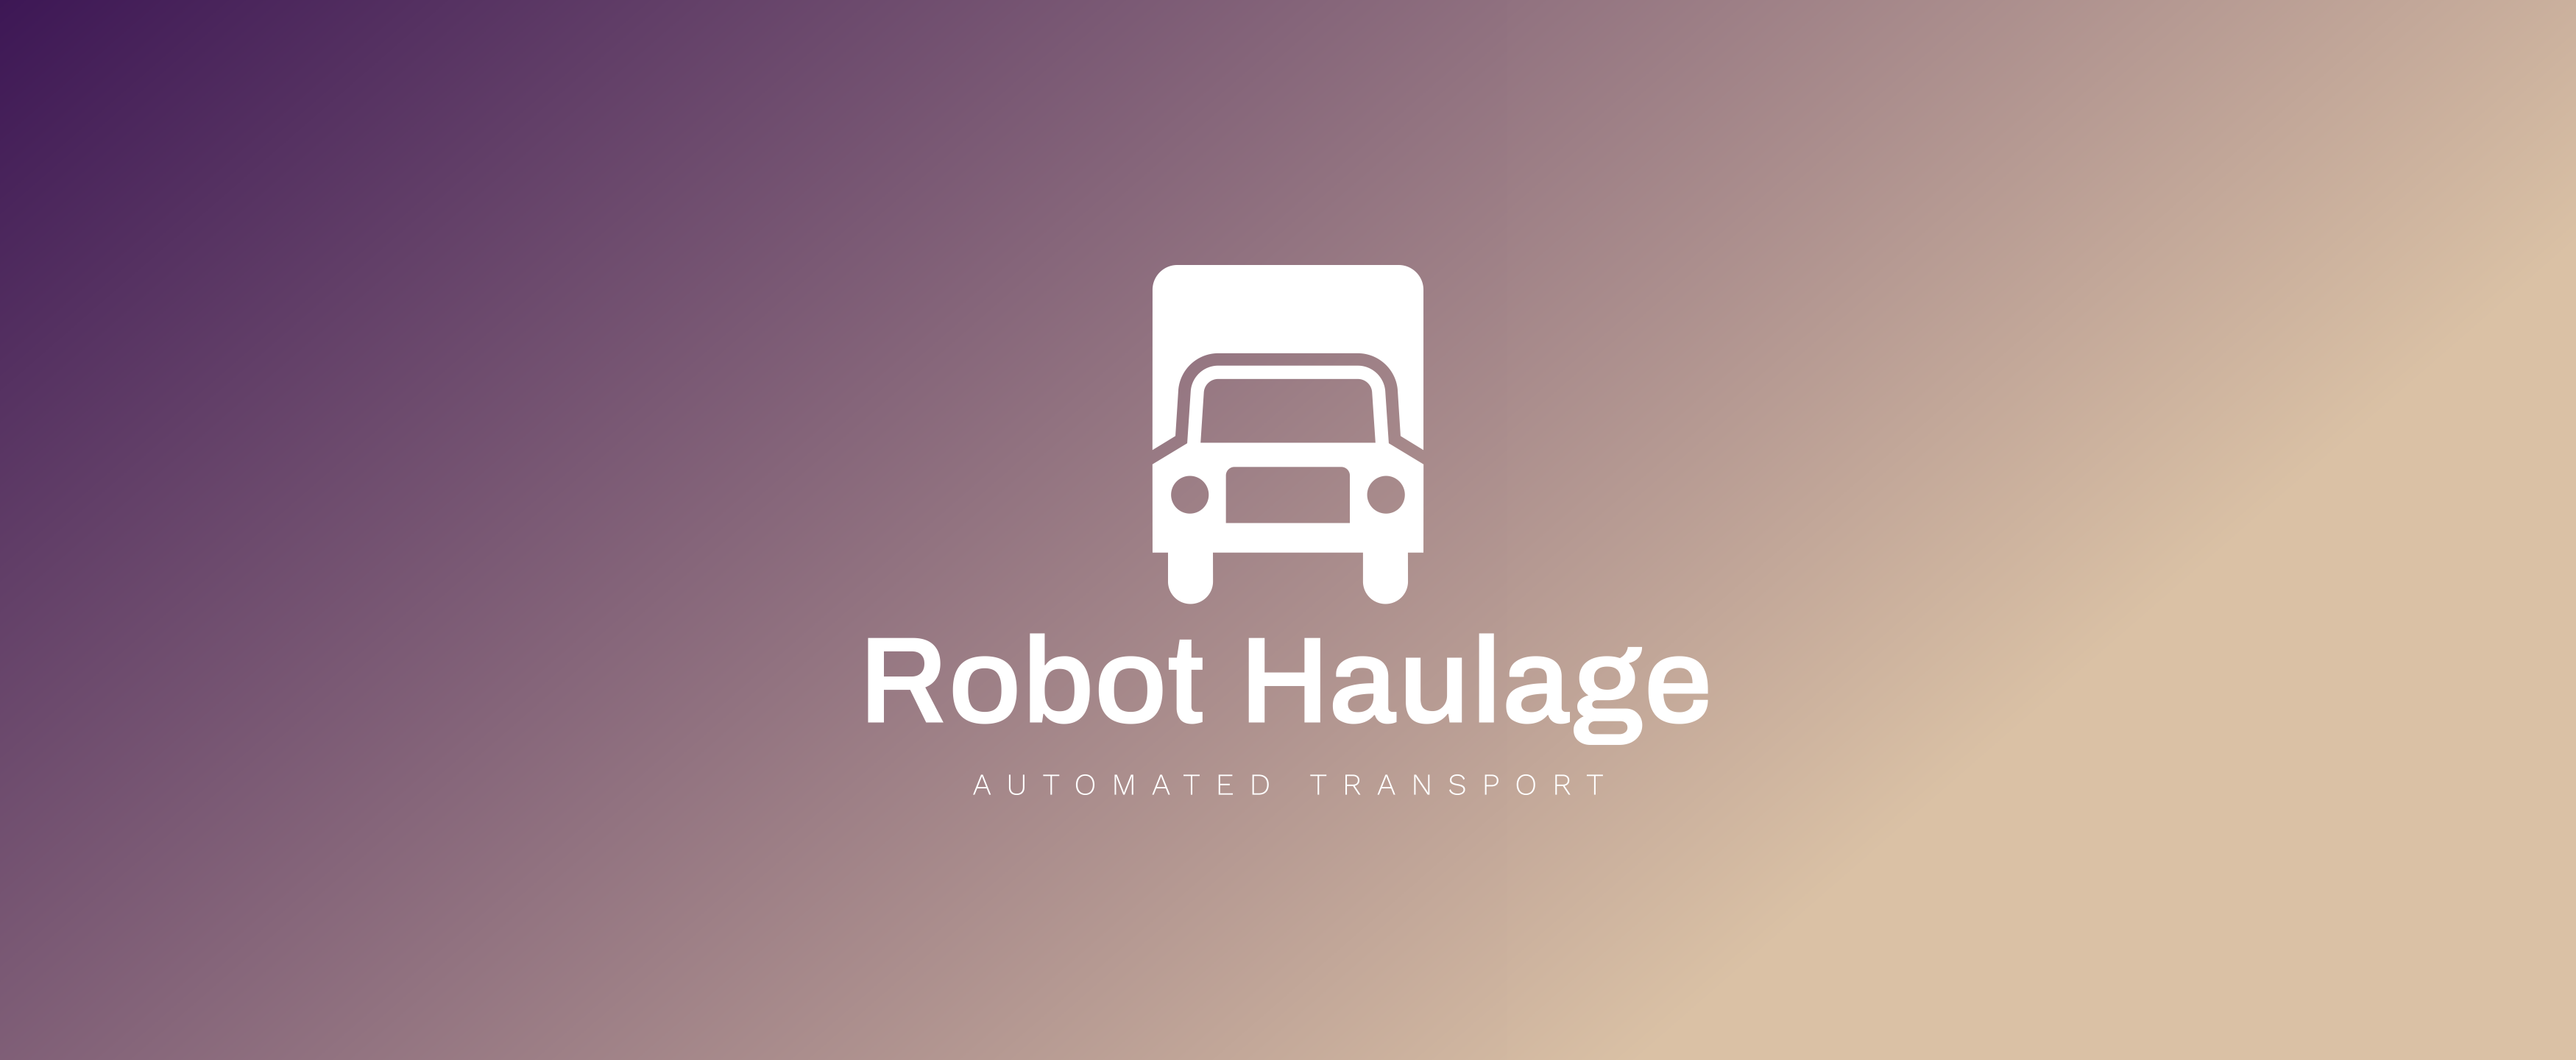 Robot Haulage